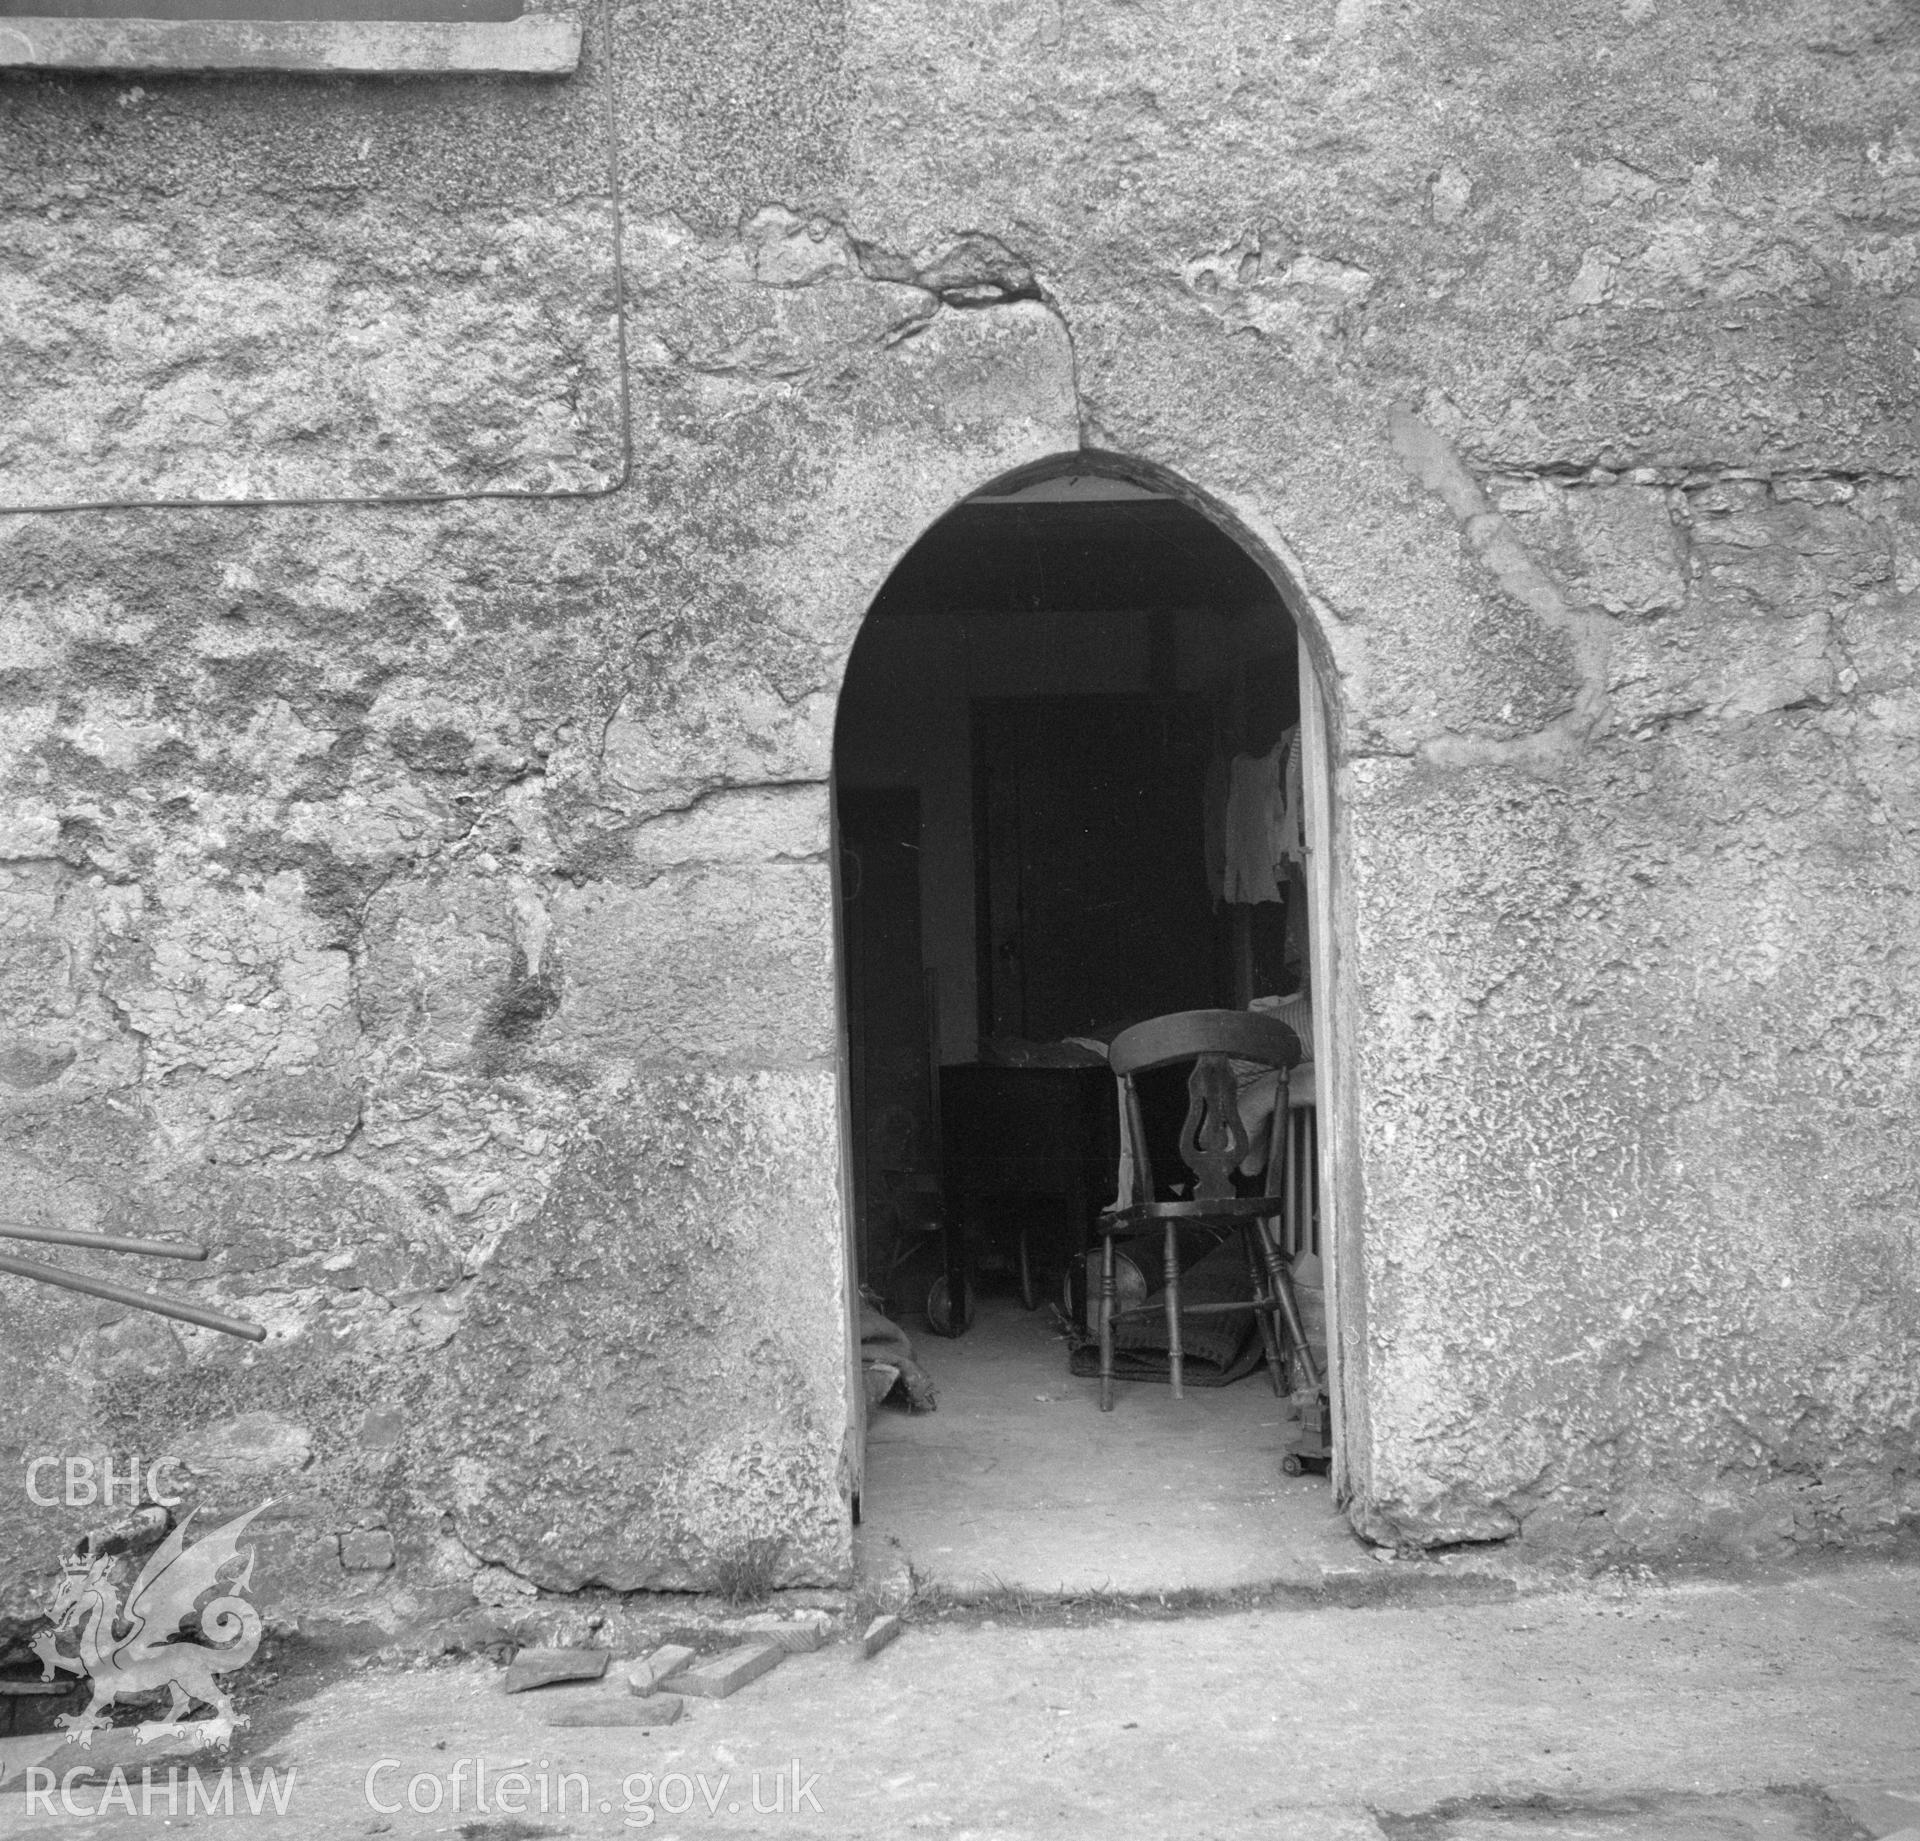 Digital copy of a nitrate negative showing exterior doorway at Faenol Fach, Abergele, Denbighshire.